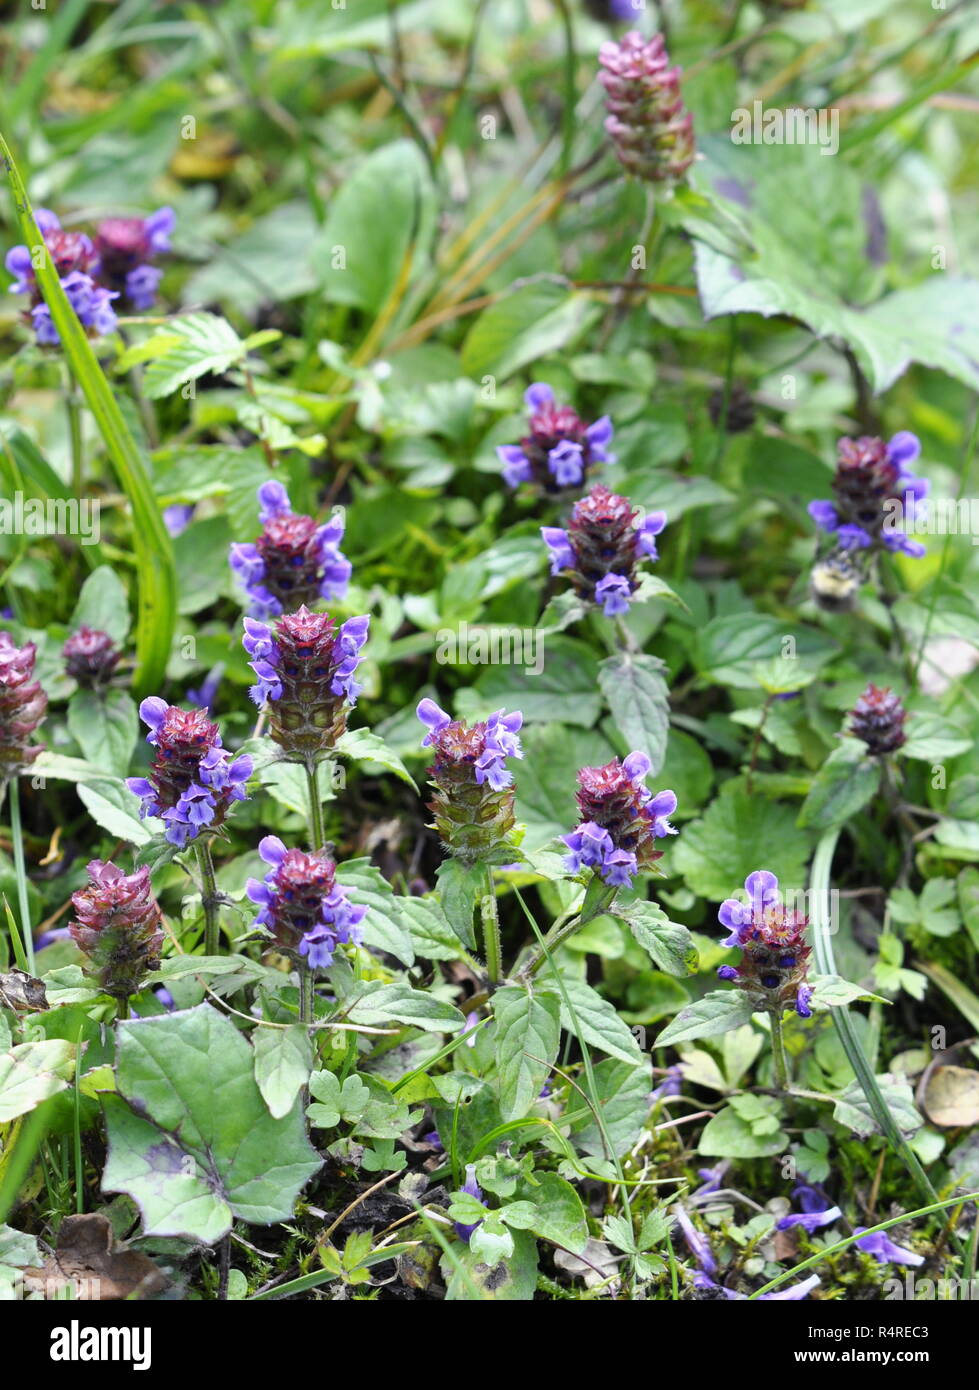 Common self-heal plant Prunella vulgaris flowering Stock Photo